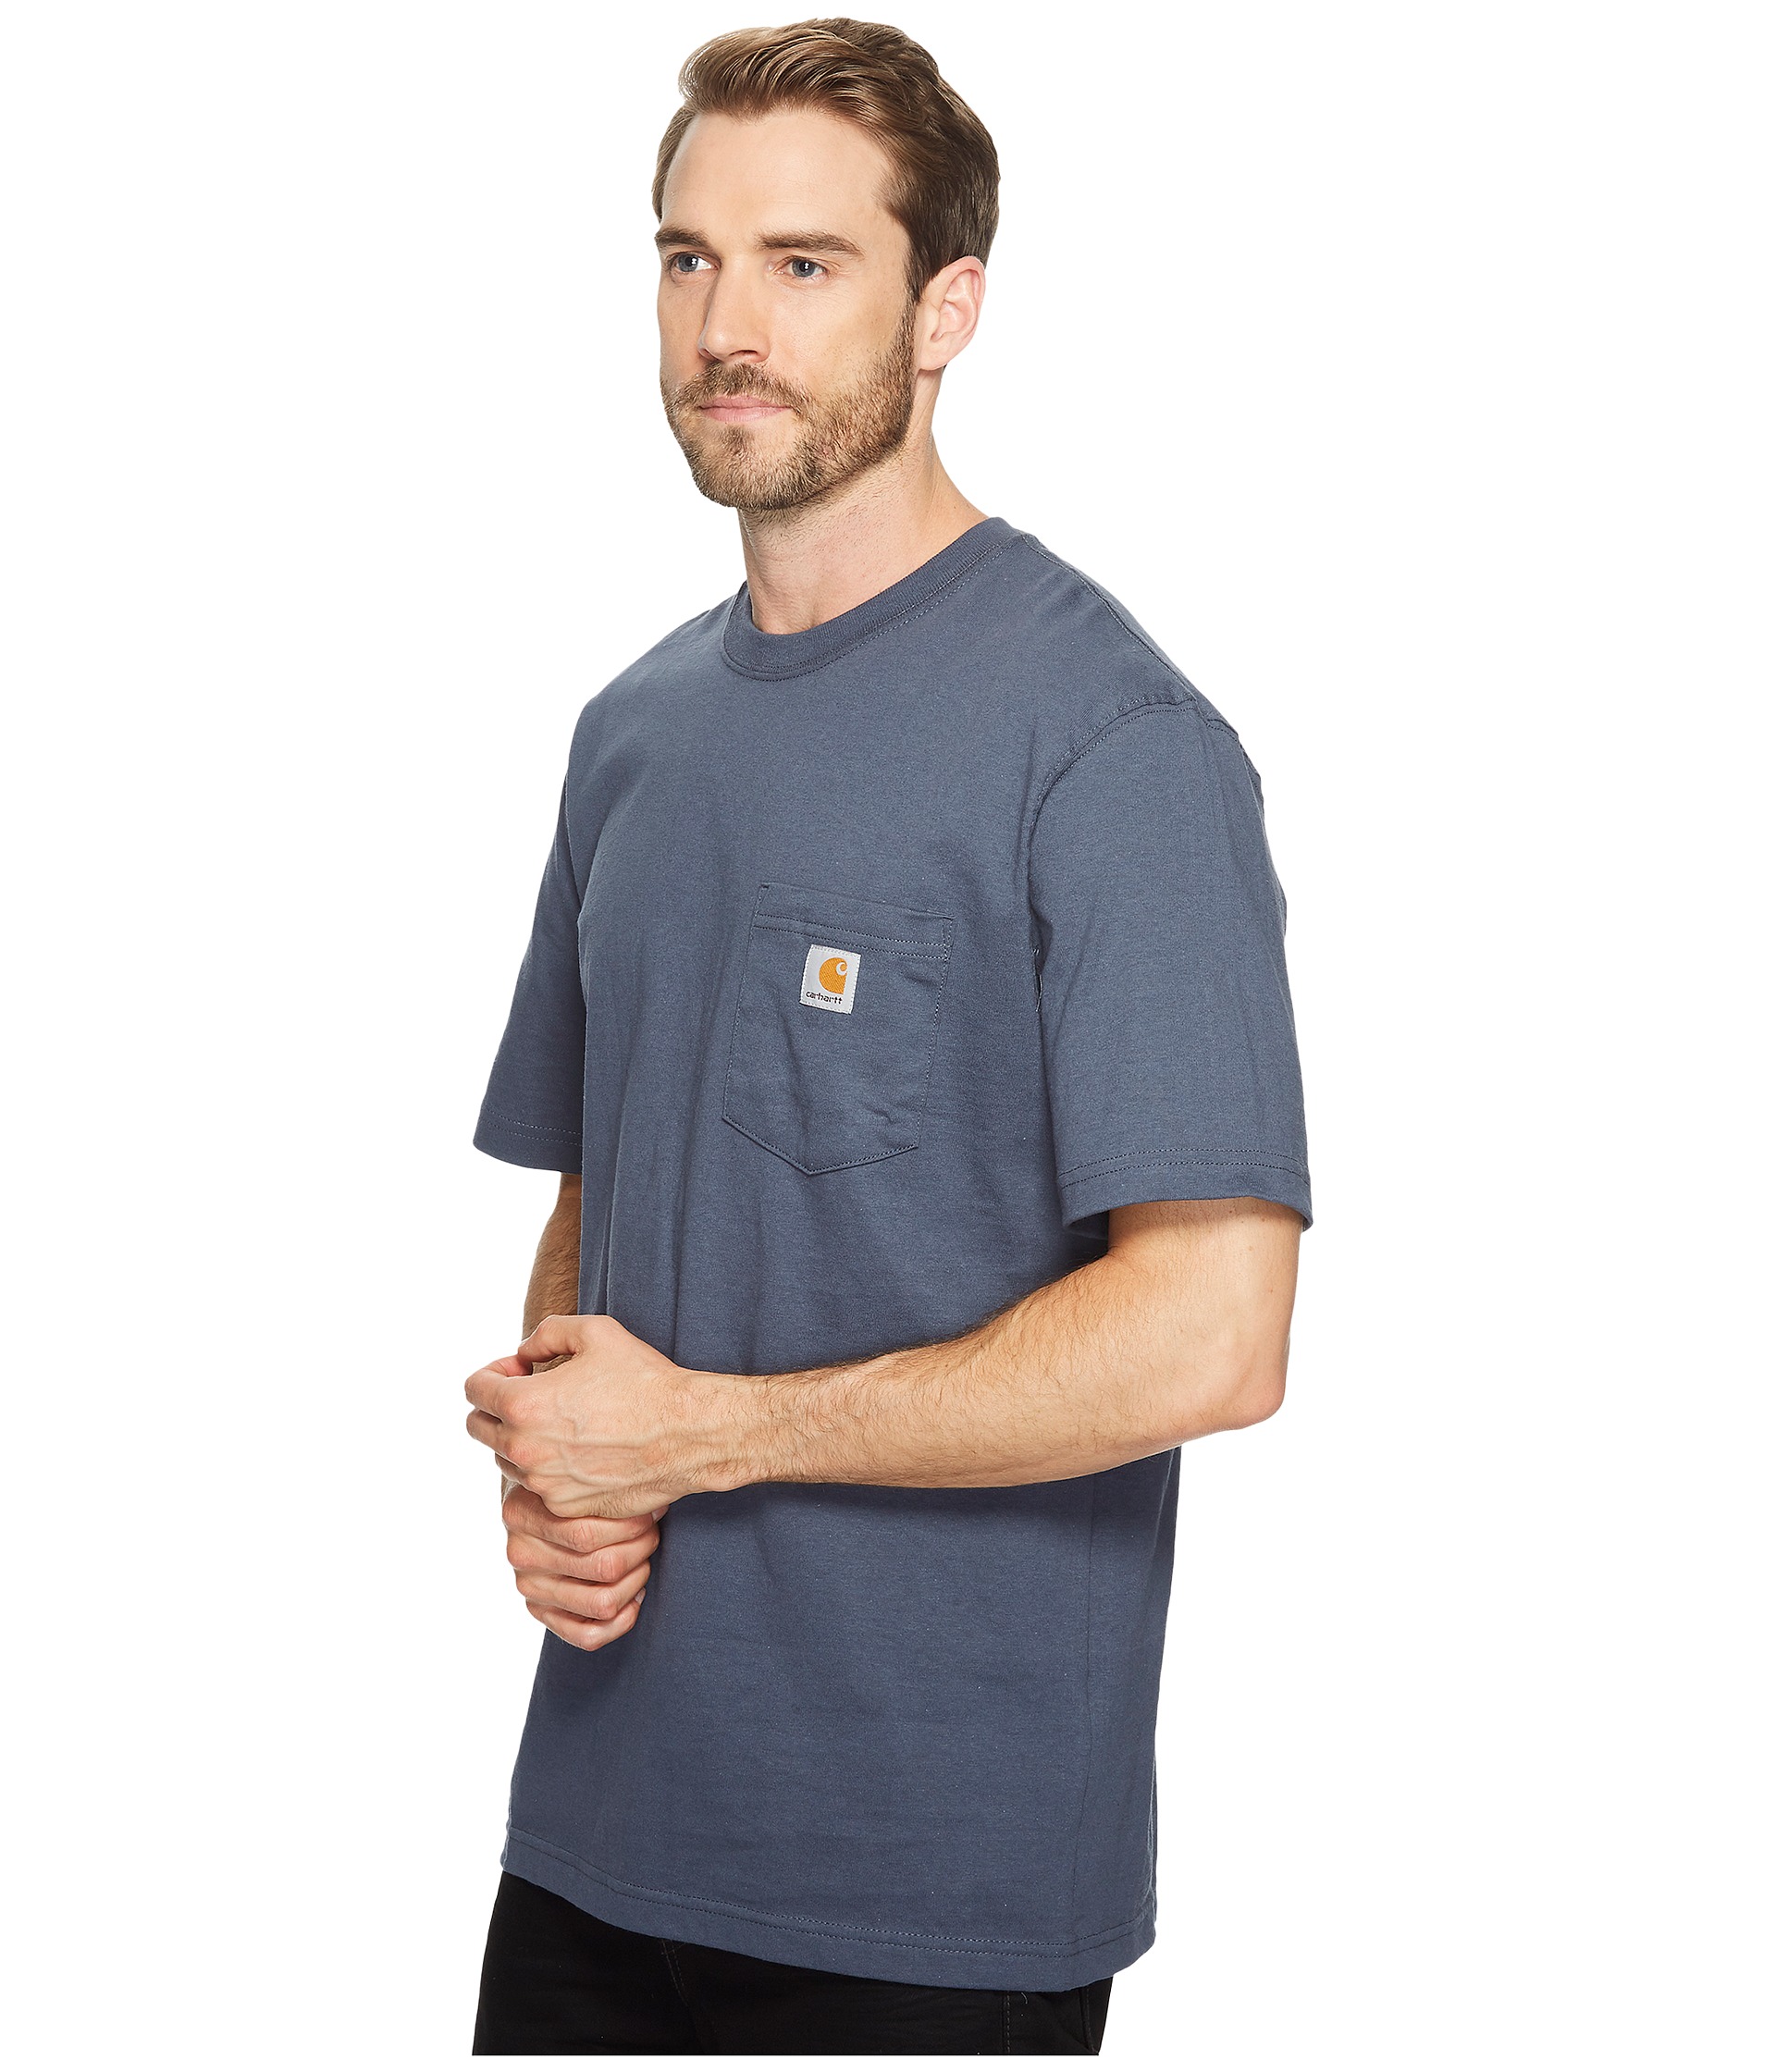 Carhartt Workwear Pocket S/S Tee K87 - Zappos.com Free Shipping BOTH Ways